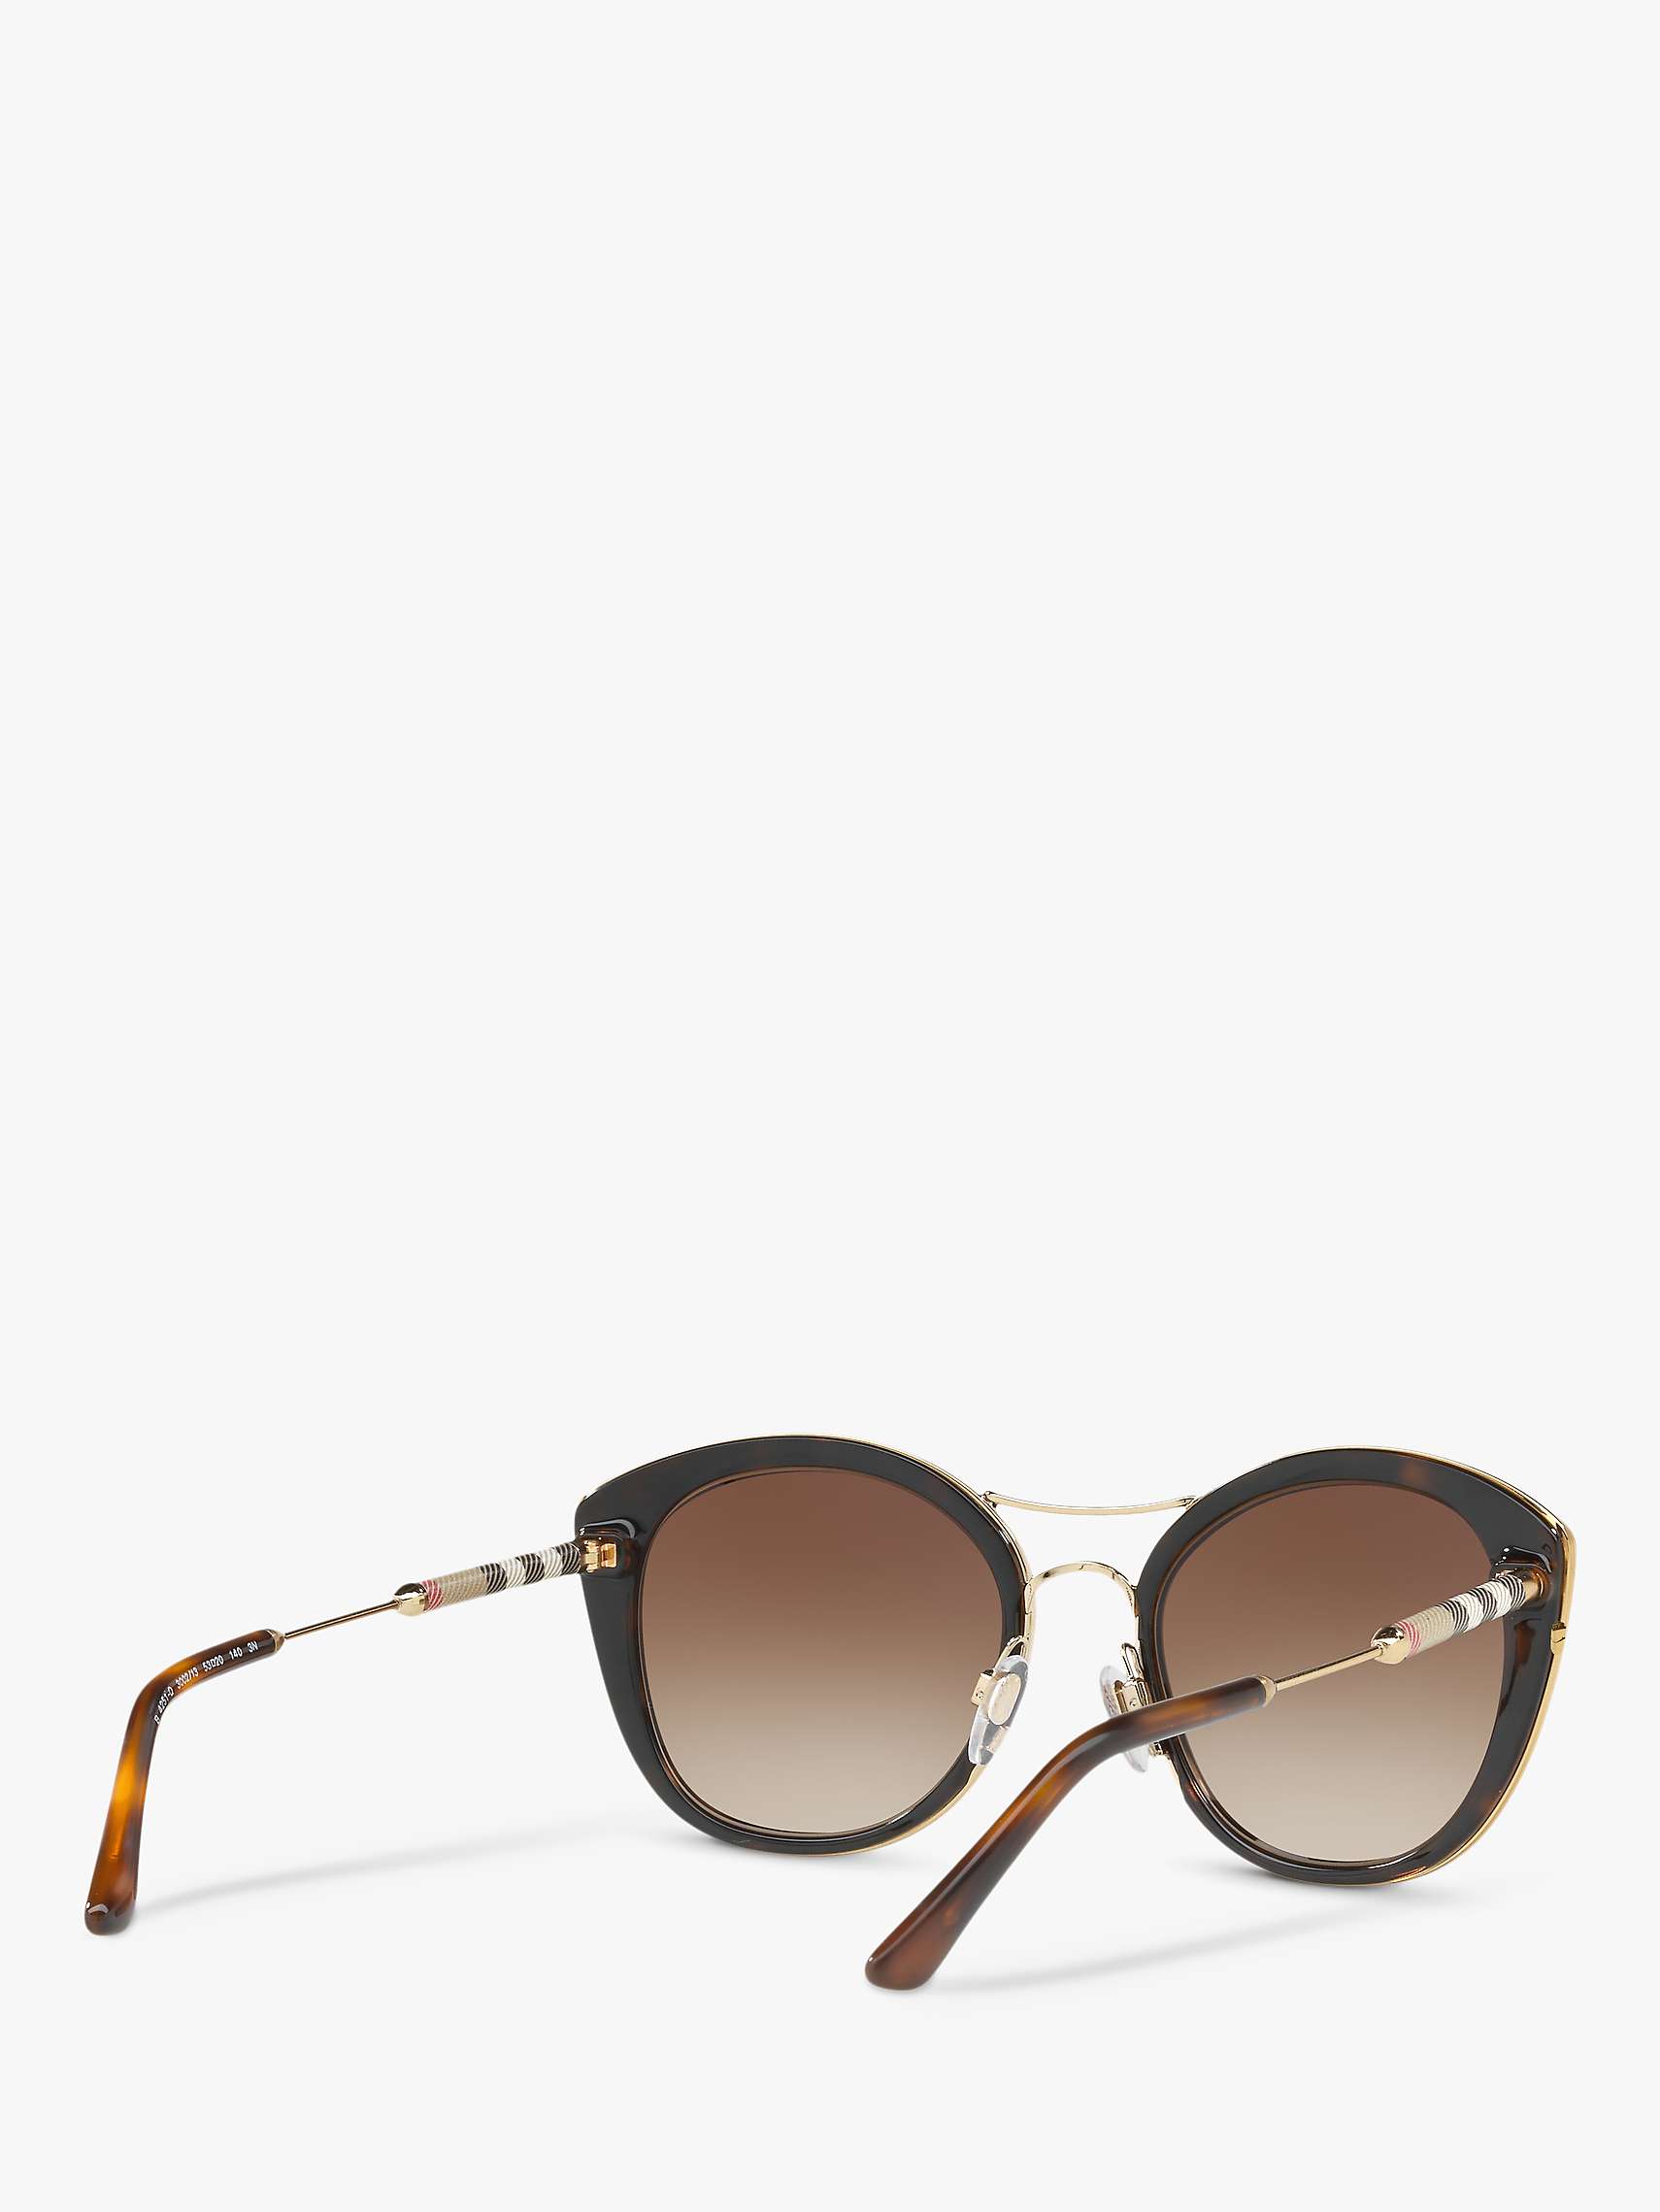 Buy Burberry BE4251Q Women's Round Sunglasses Online at johnlewis.com